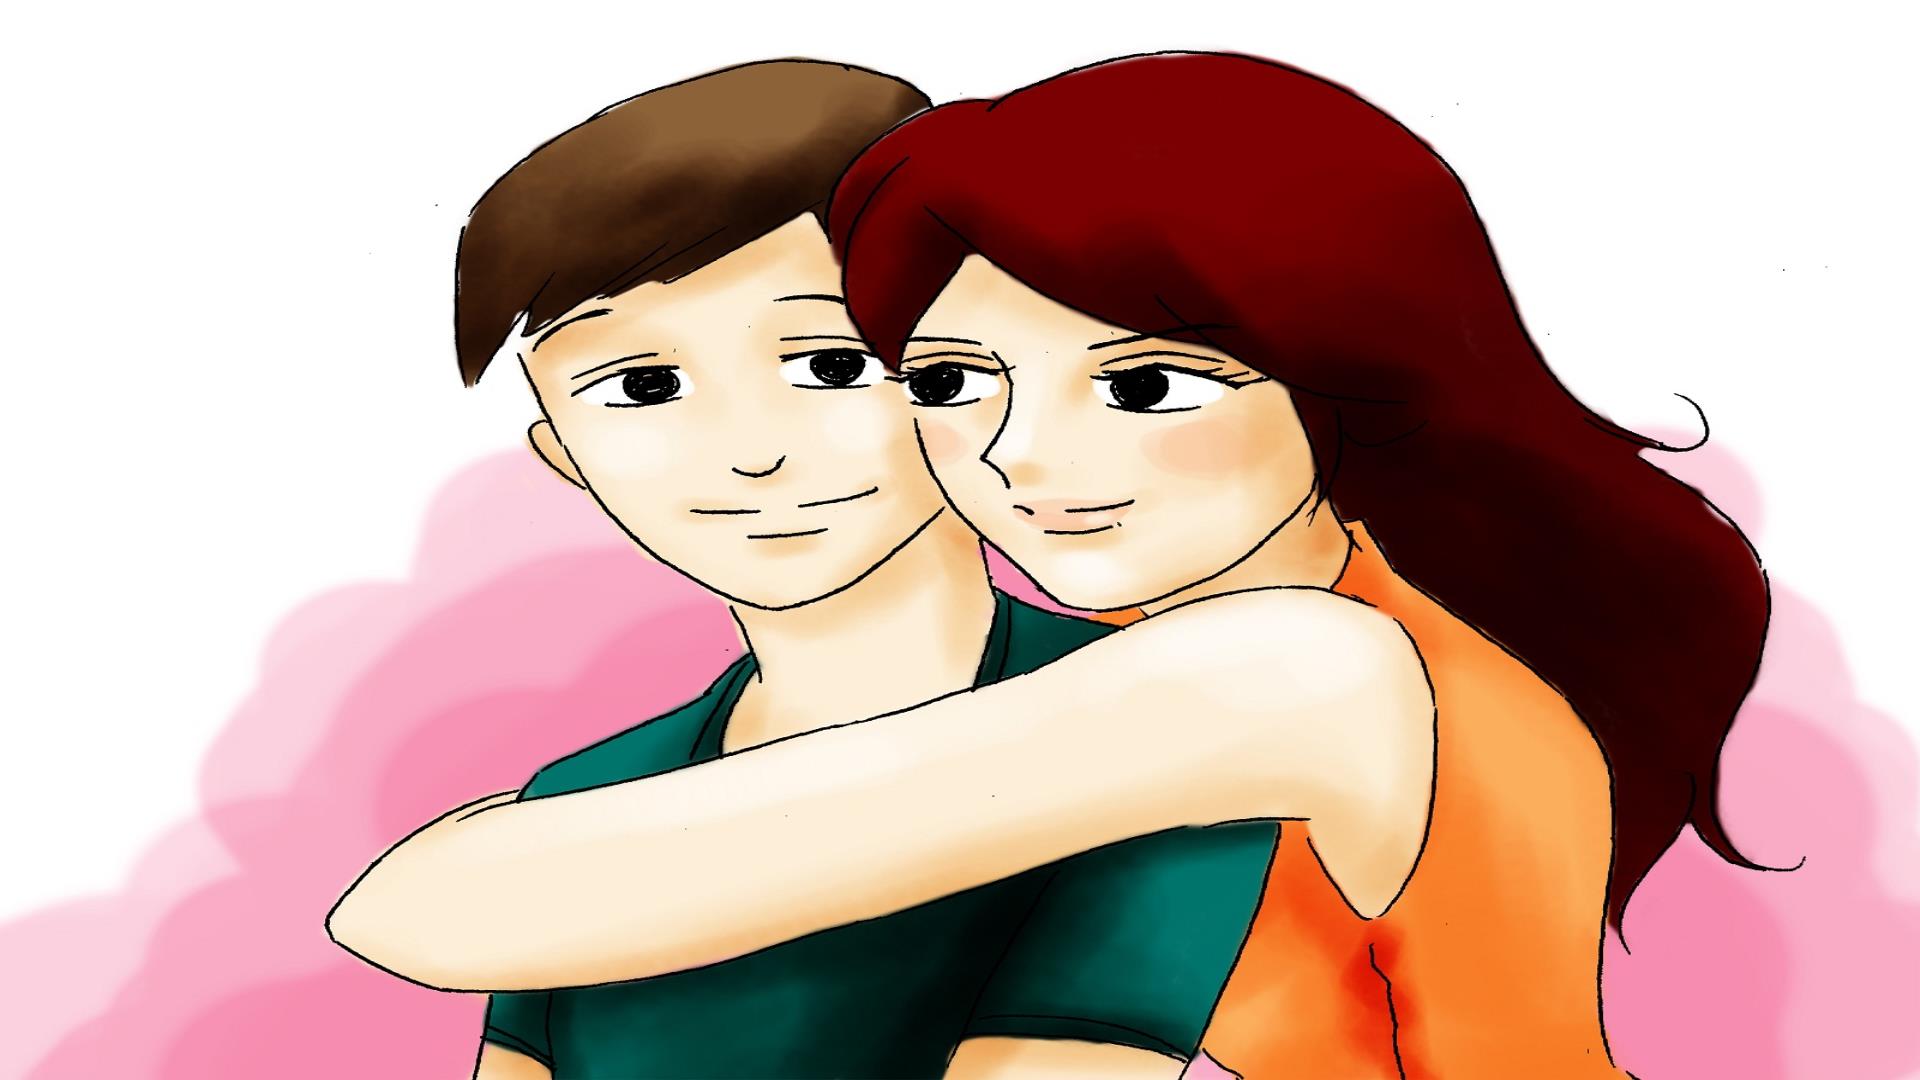 Couple Animated Images - Animated Couple Hugging | Bodenuwasusa